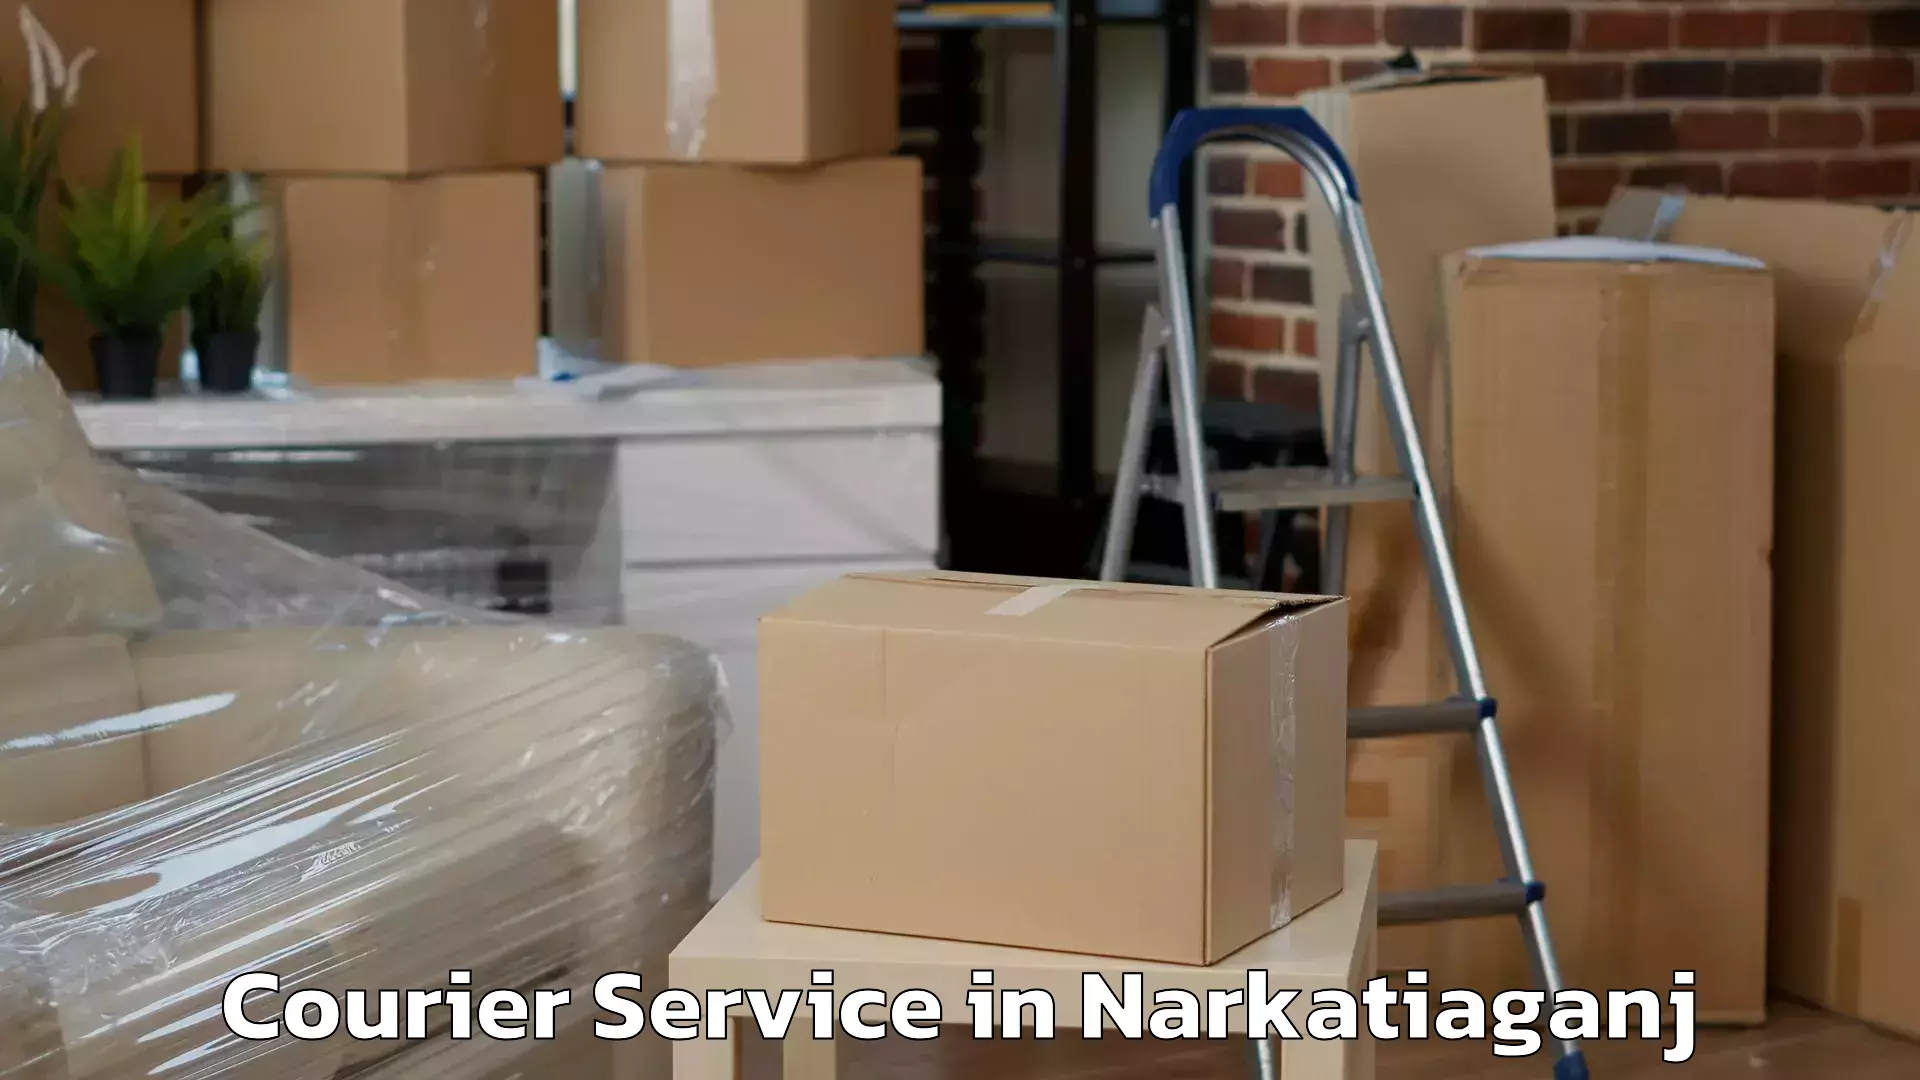 Business shipping needs in Narkatiaganj